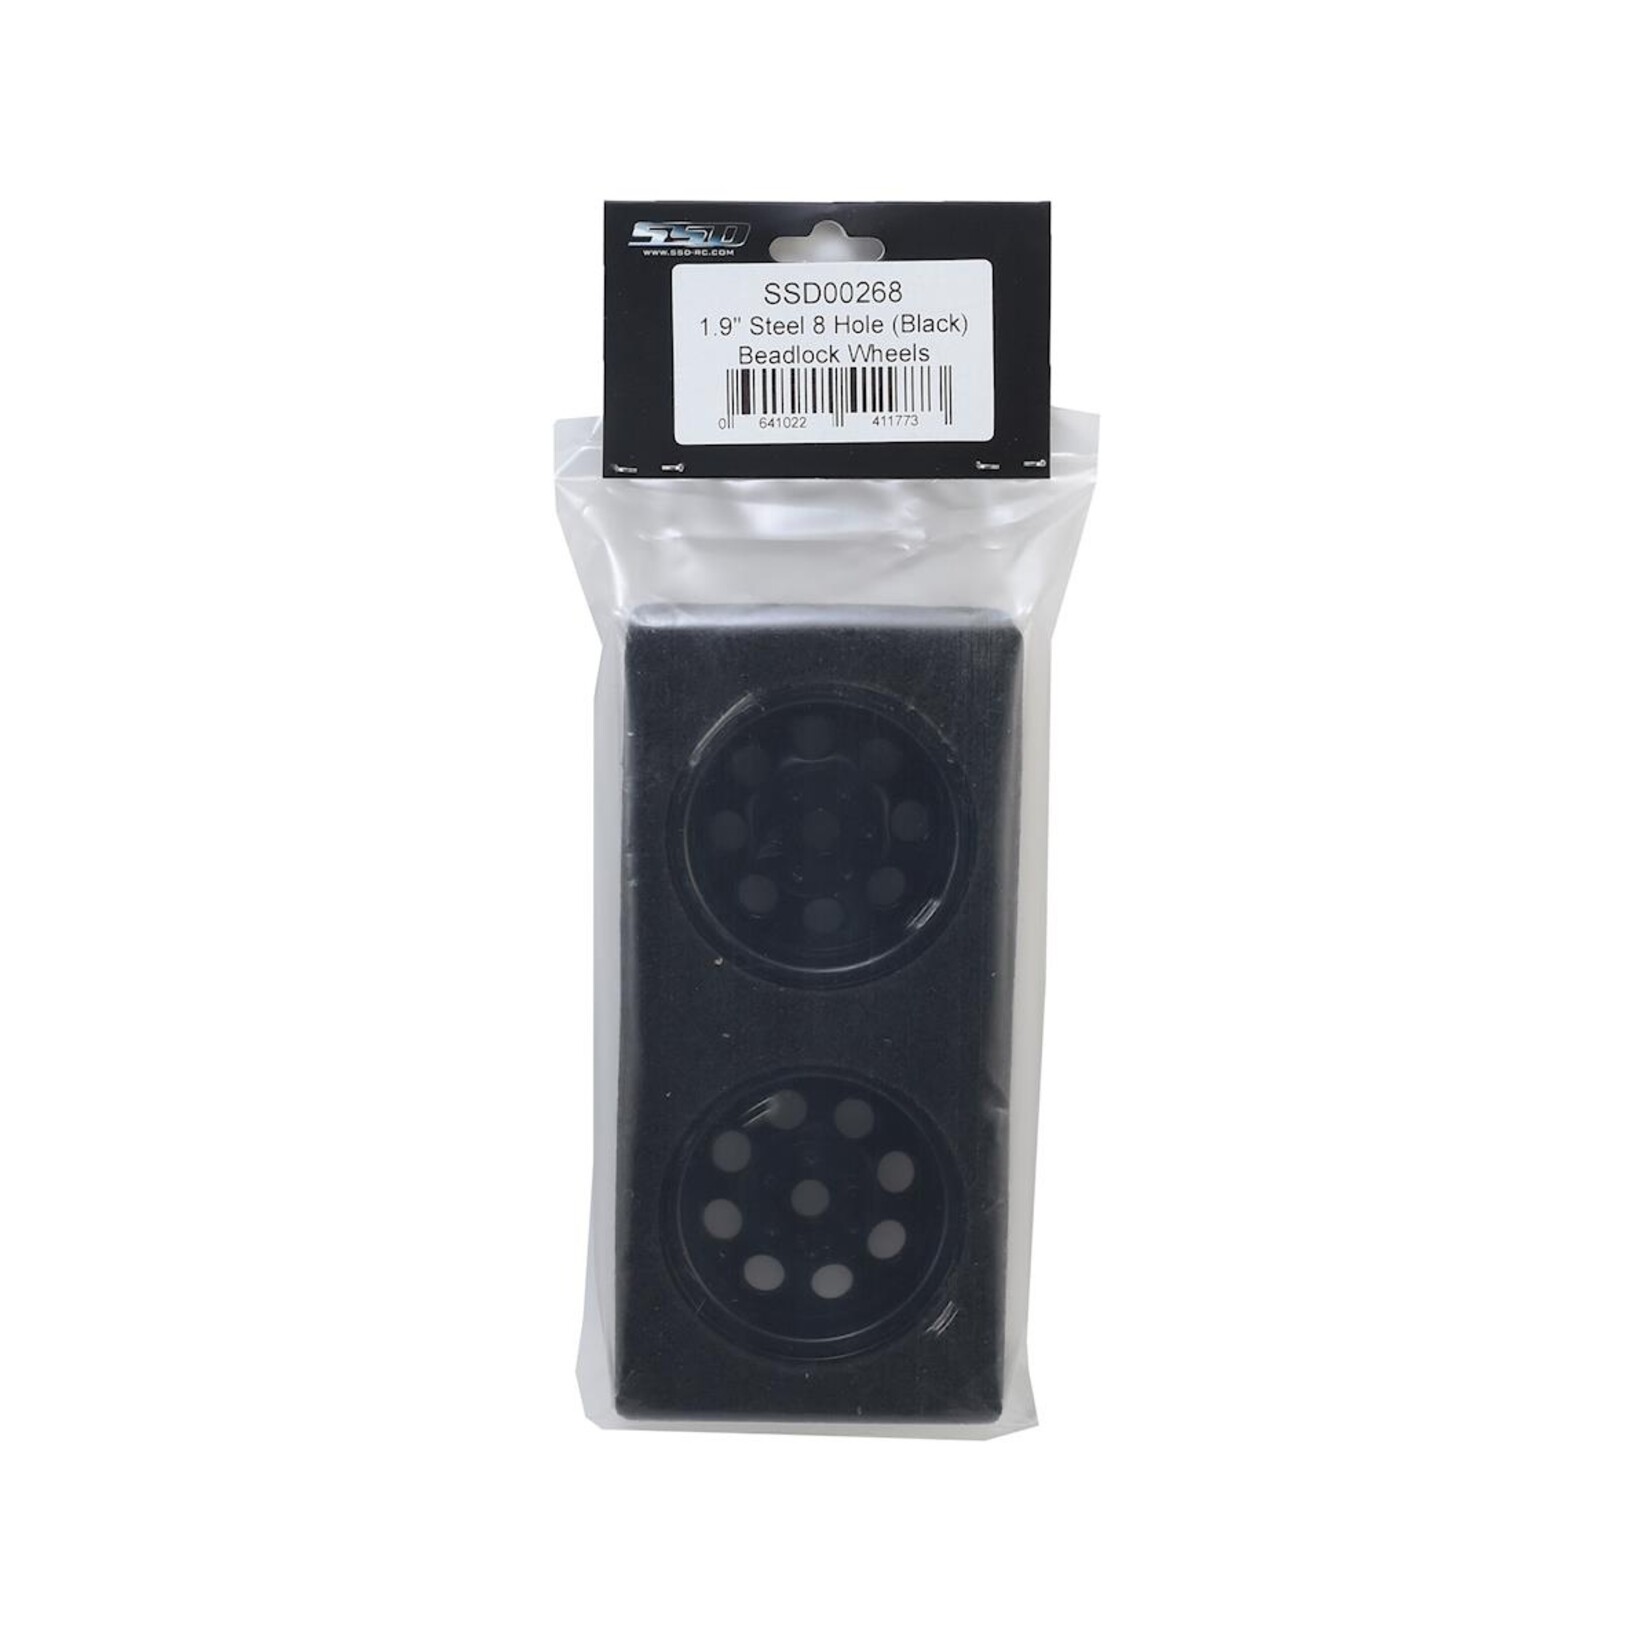 SSD RC SSD RC 8 Hole 1.9” Steel Beadlock Wheels (Black) #SSD00268